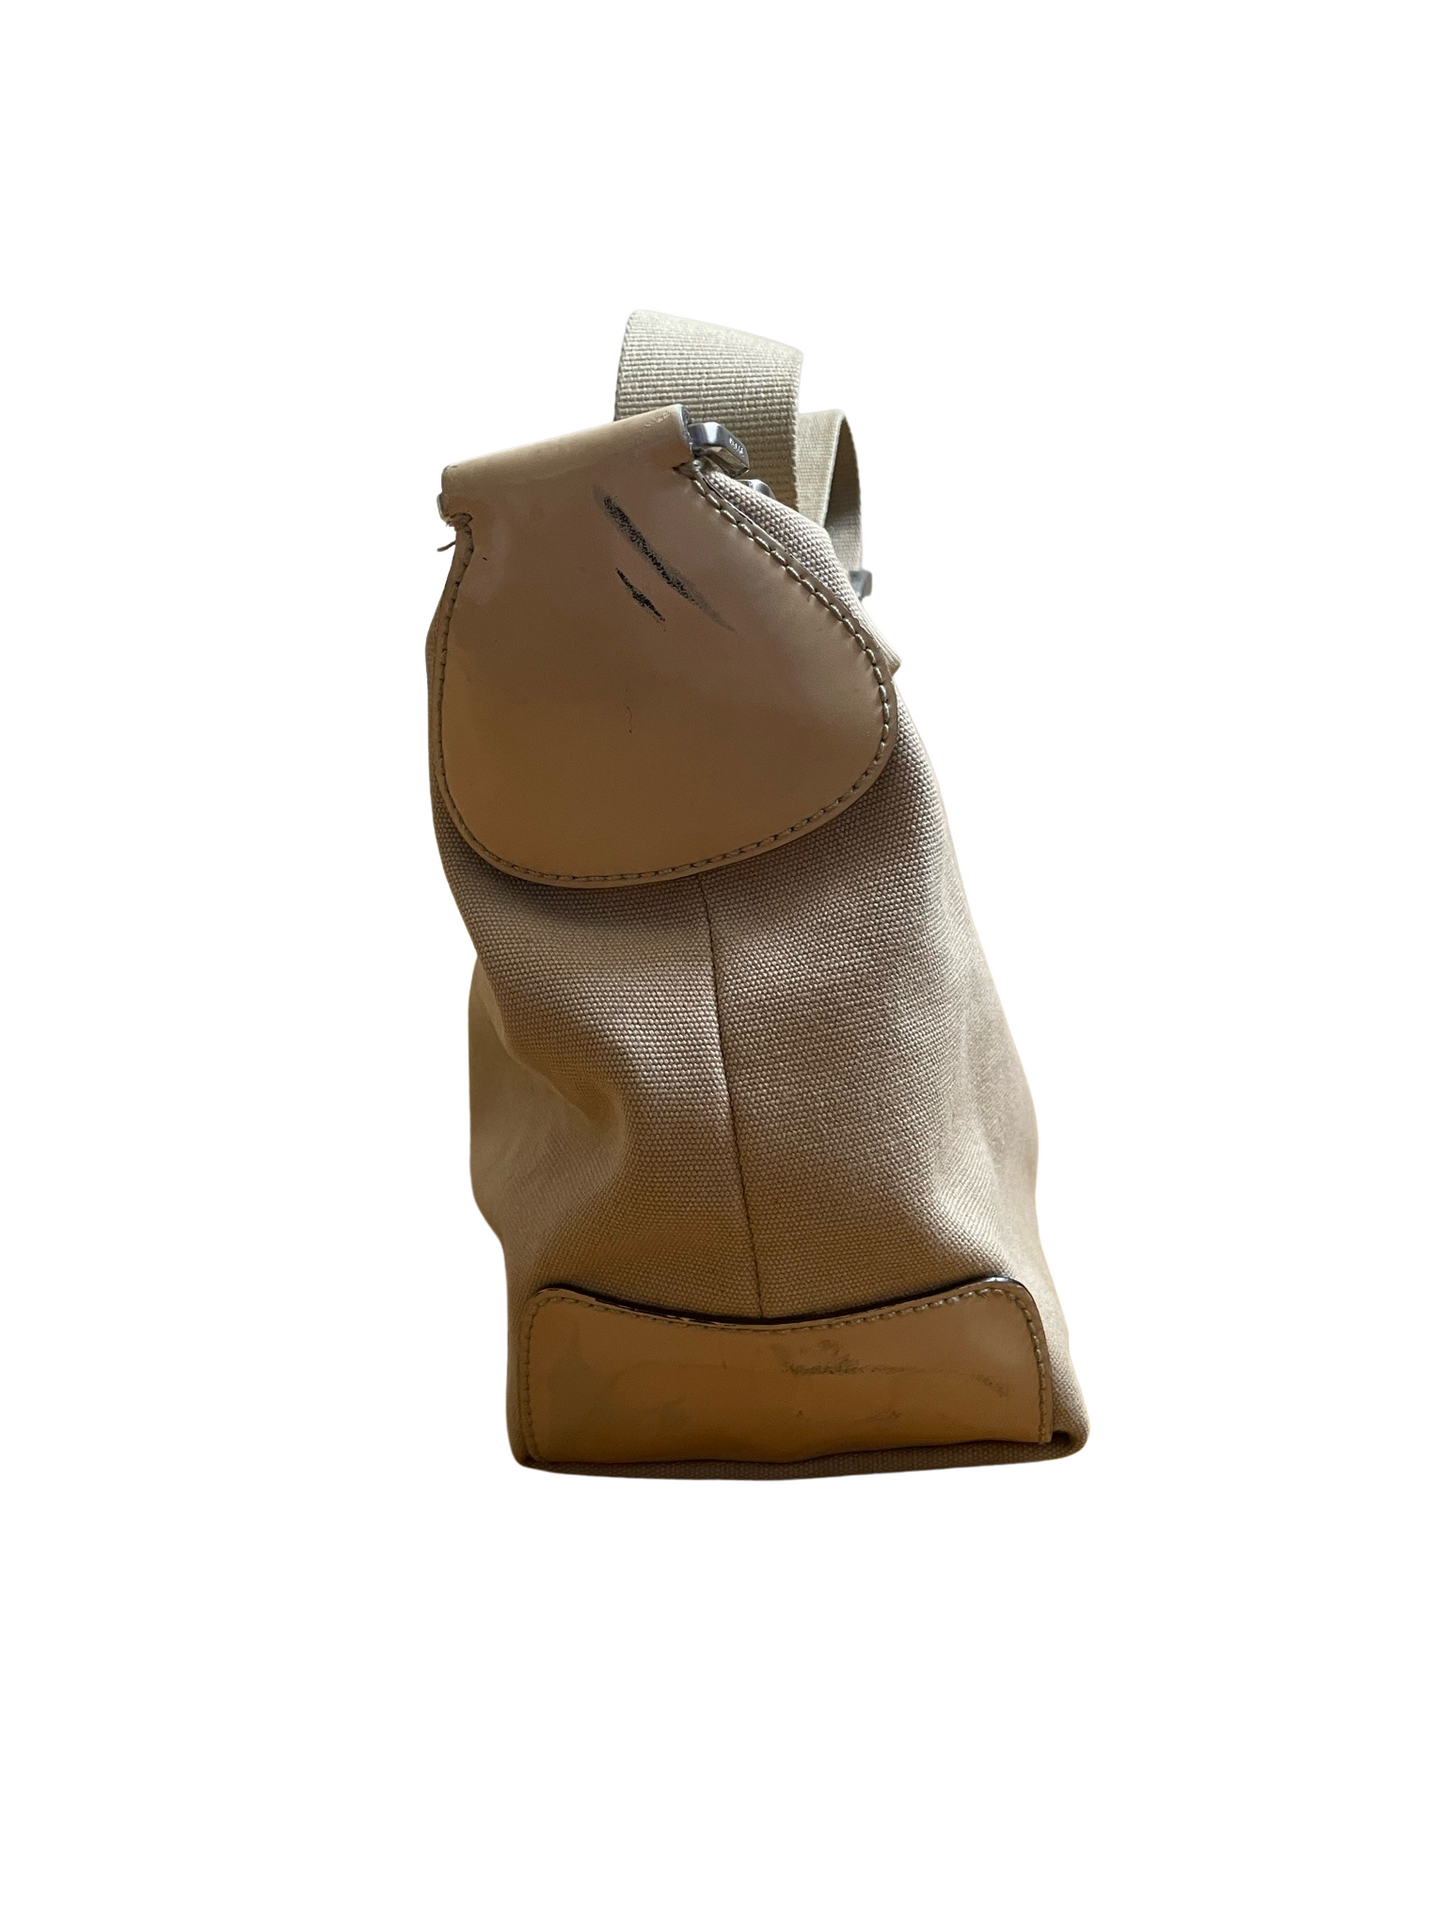 Prada Beige Nylon & Leather Shoulder Bag